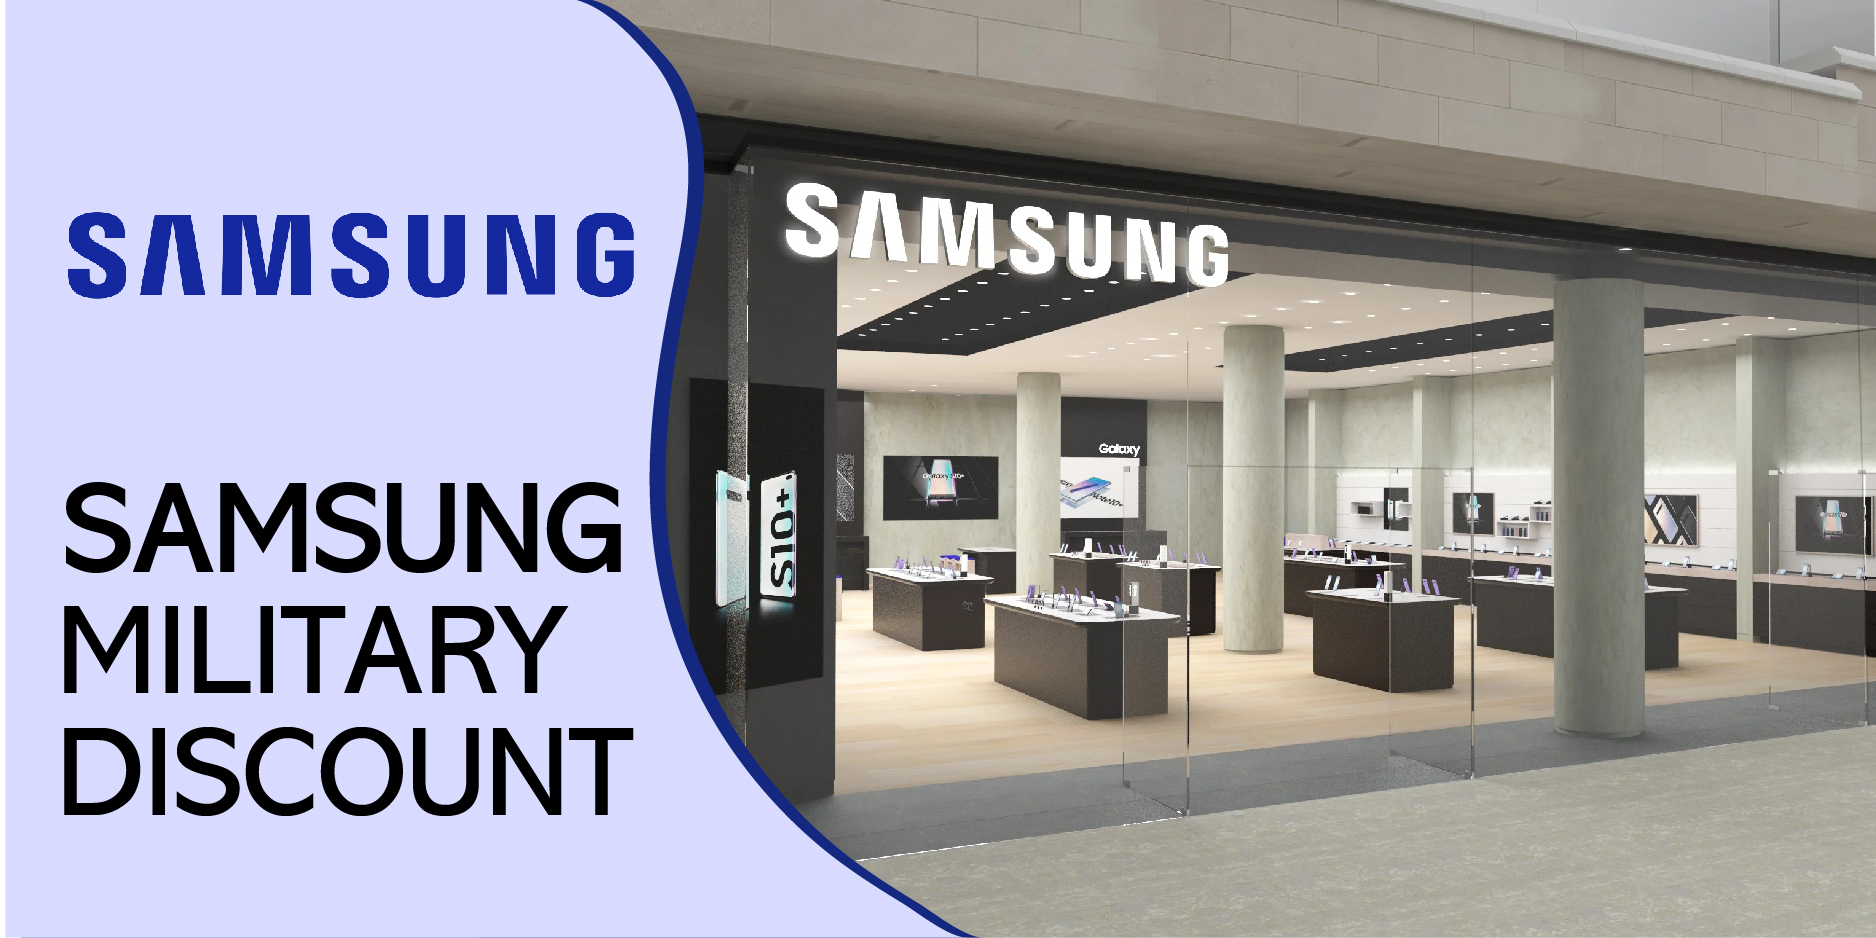 Samsung Military Discounts